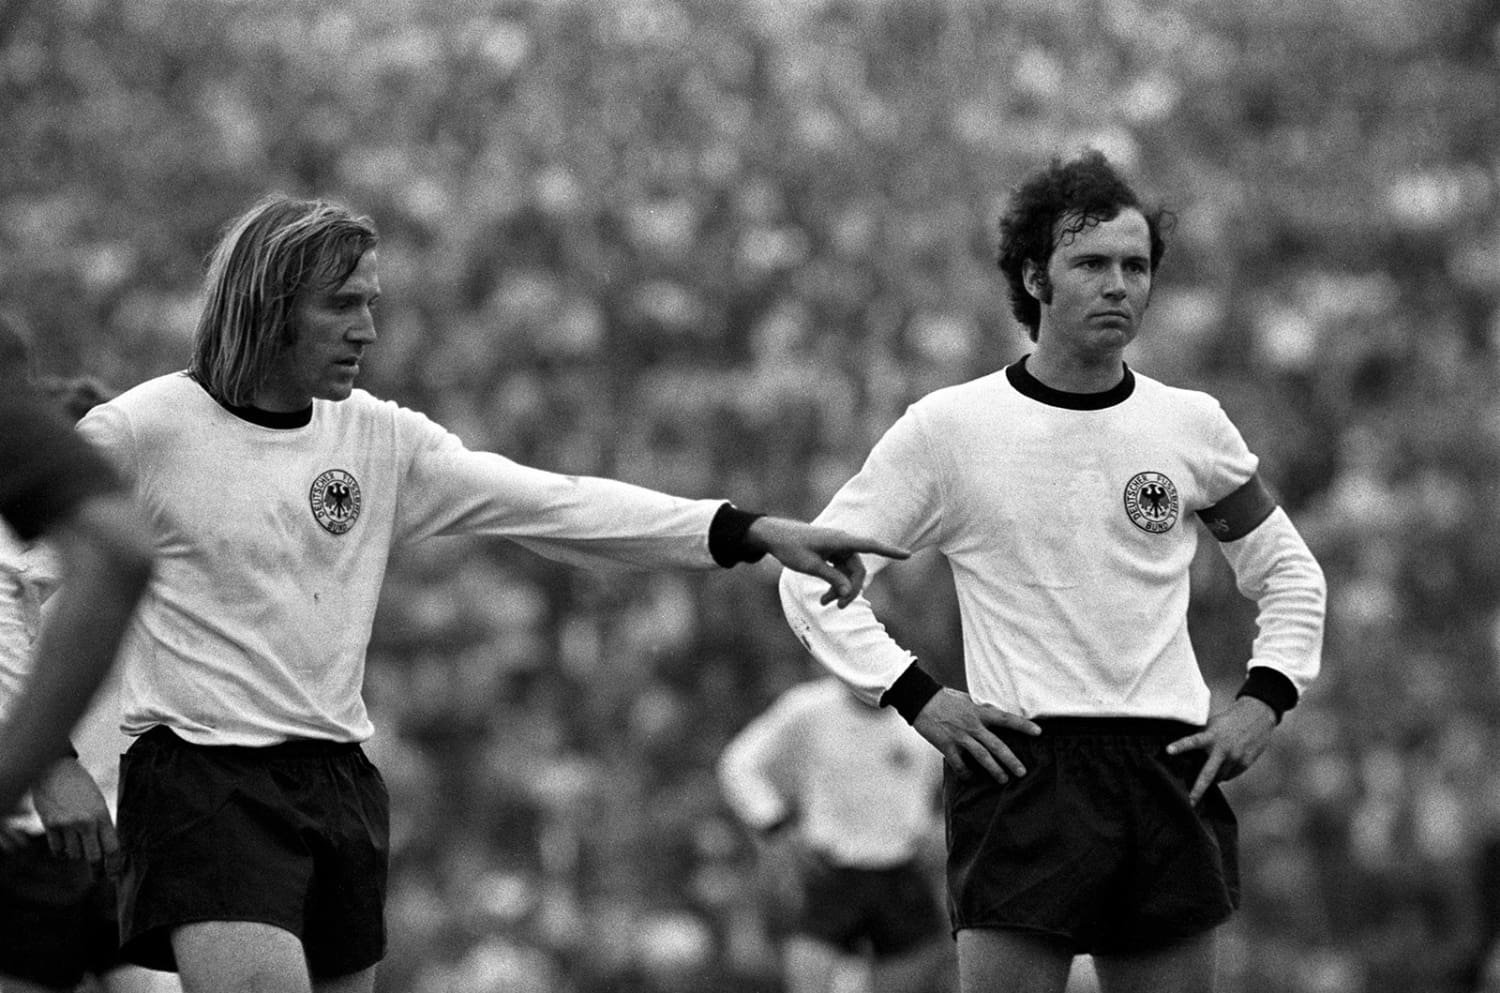 Que savez-vous du maillot Adidas de Beckenbauer